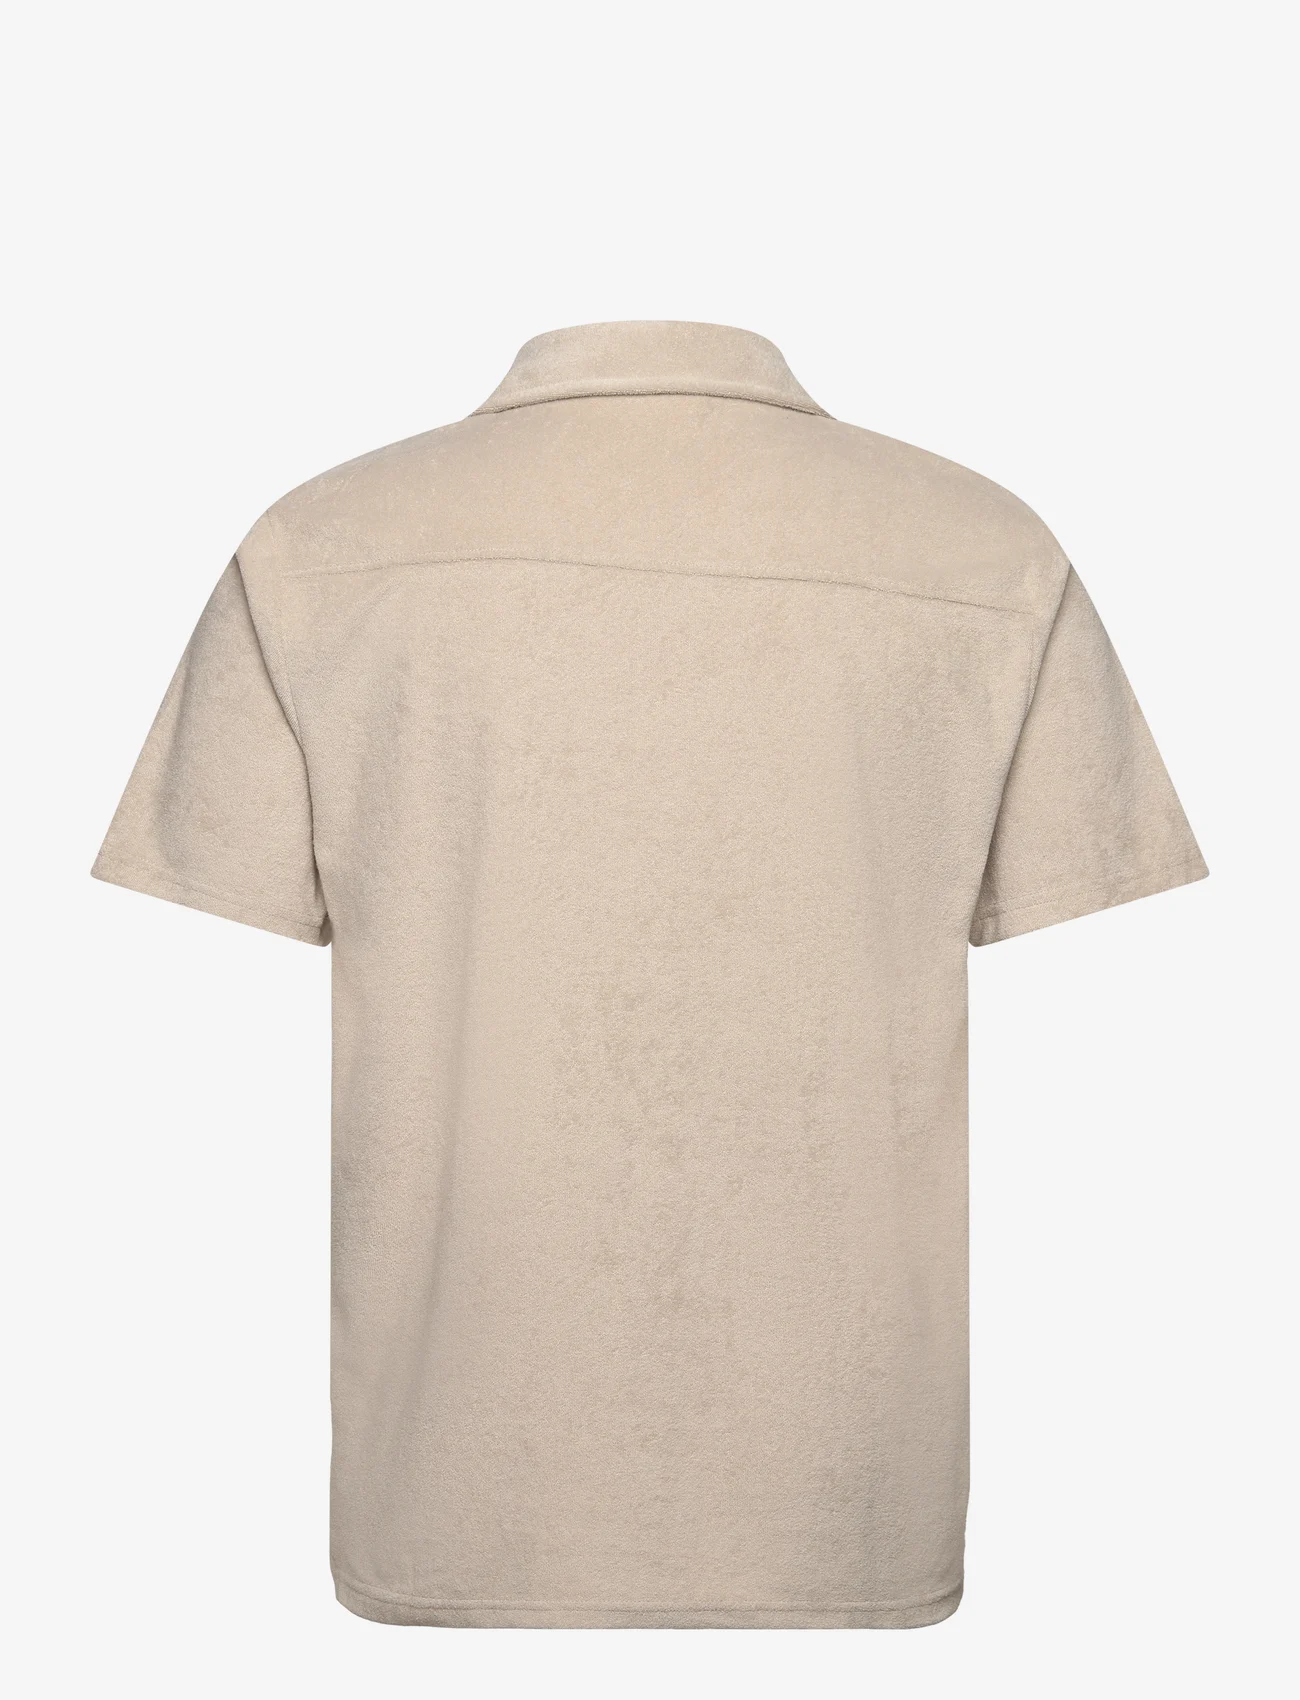 Lindbergh - SS shirt Terry - kortärmade skjortor - stone - 1